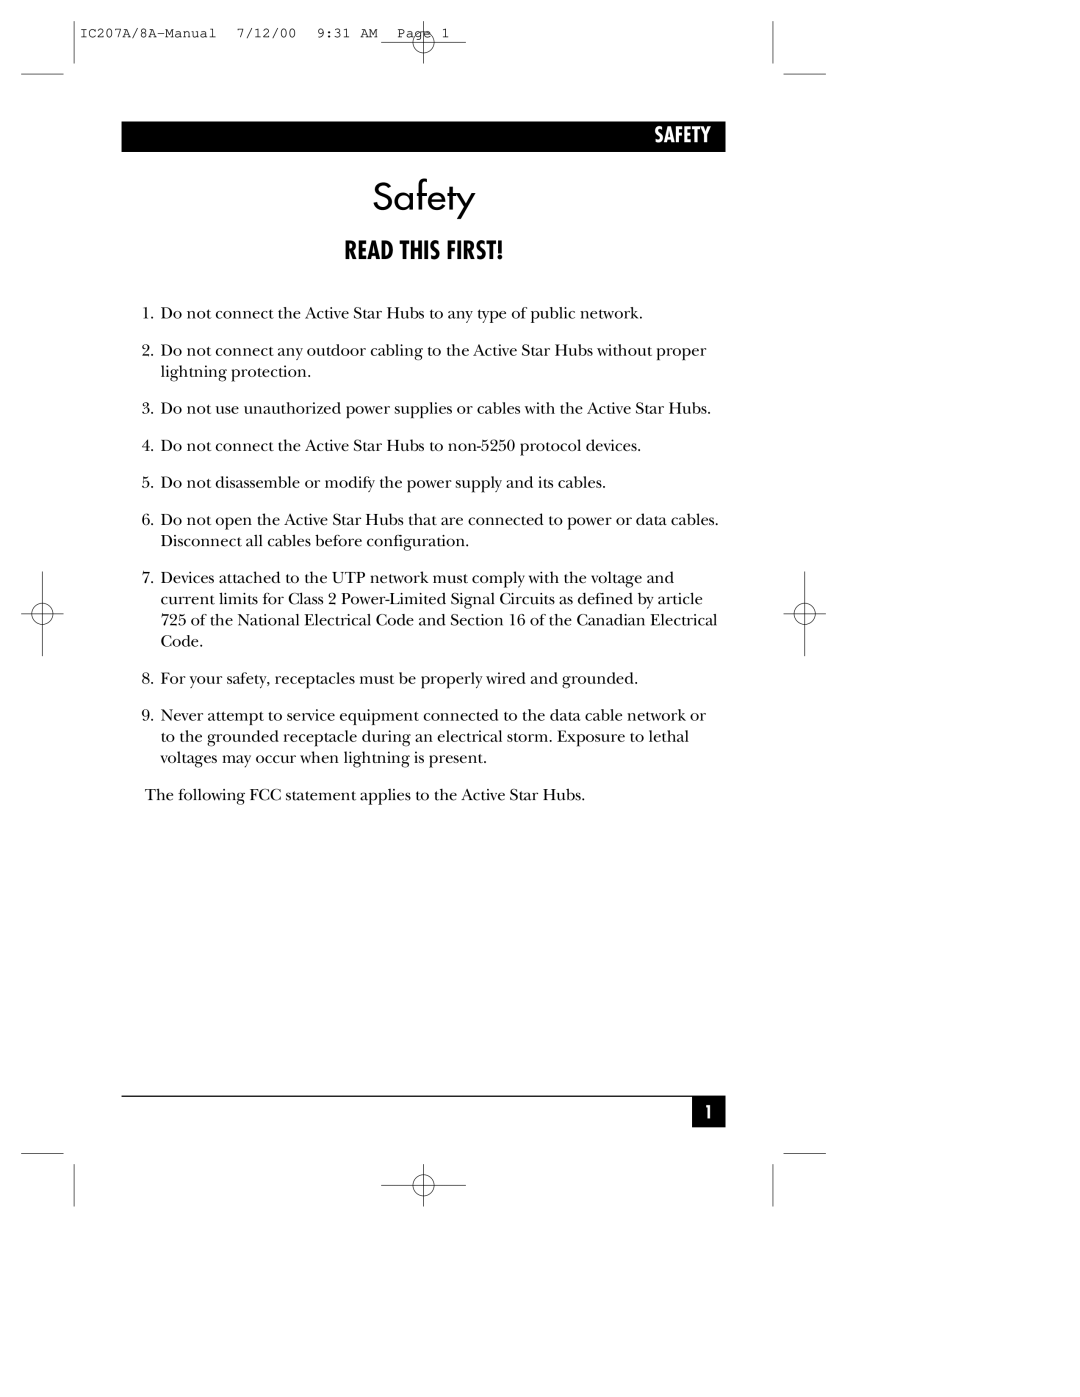 Black Box RJ-11, RJ-45 manual Safety, Read This First 